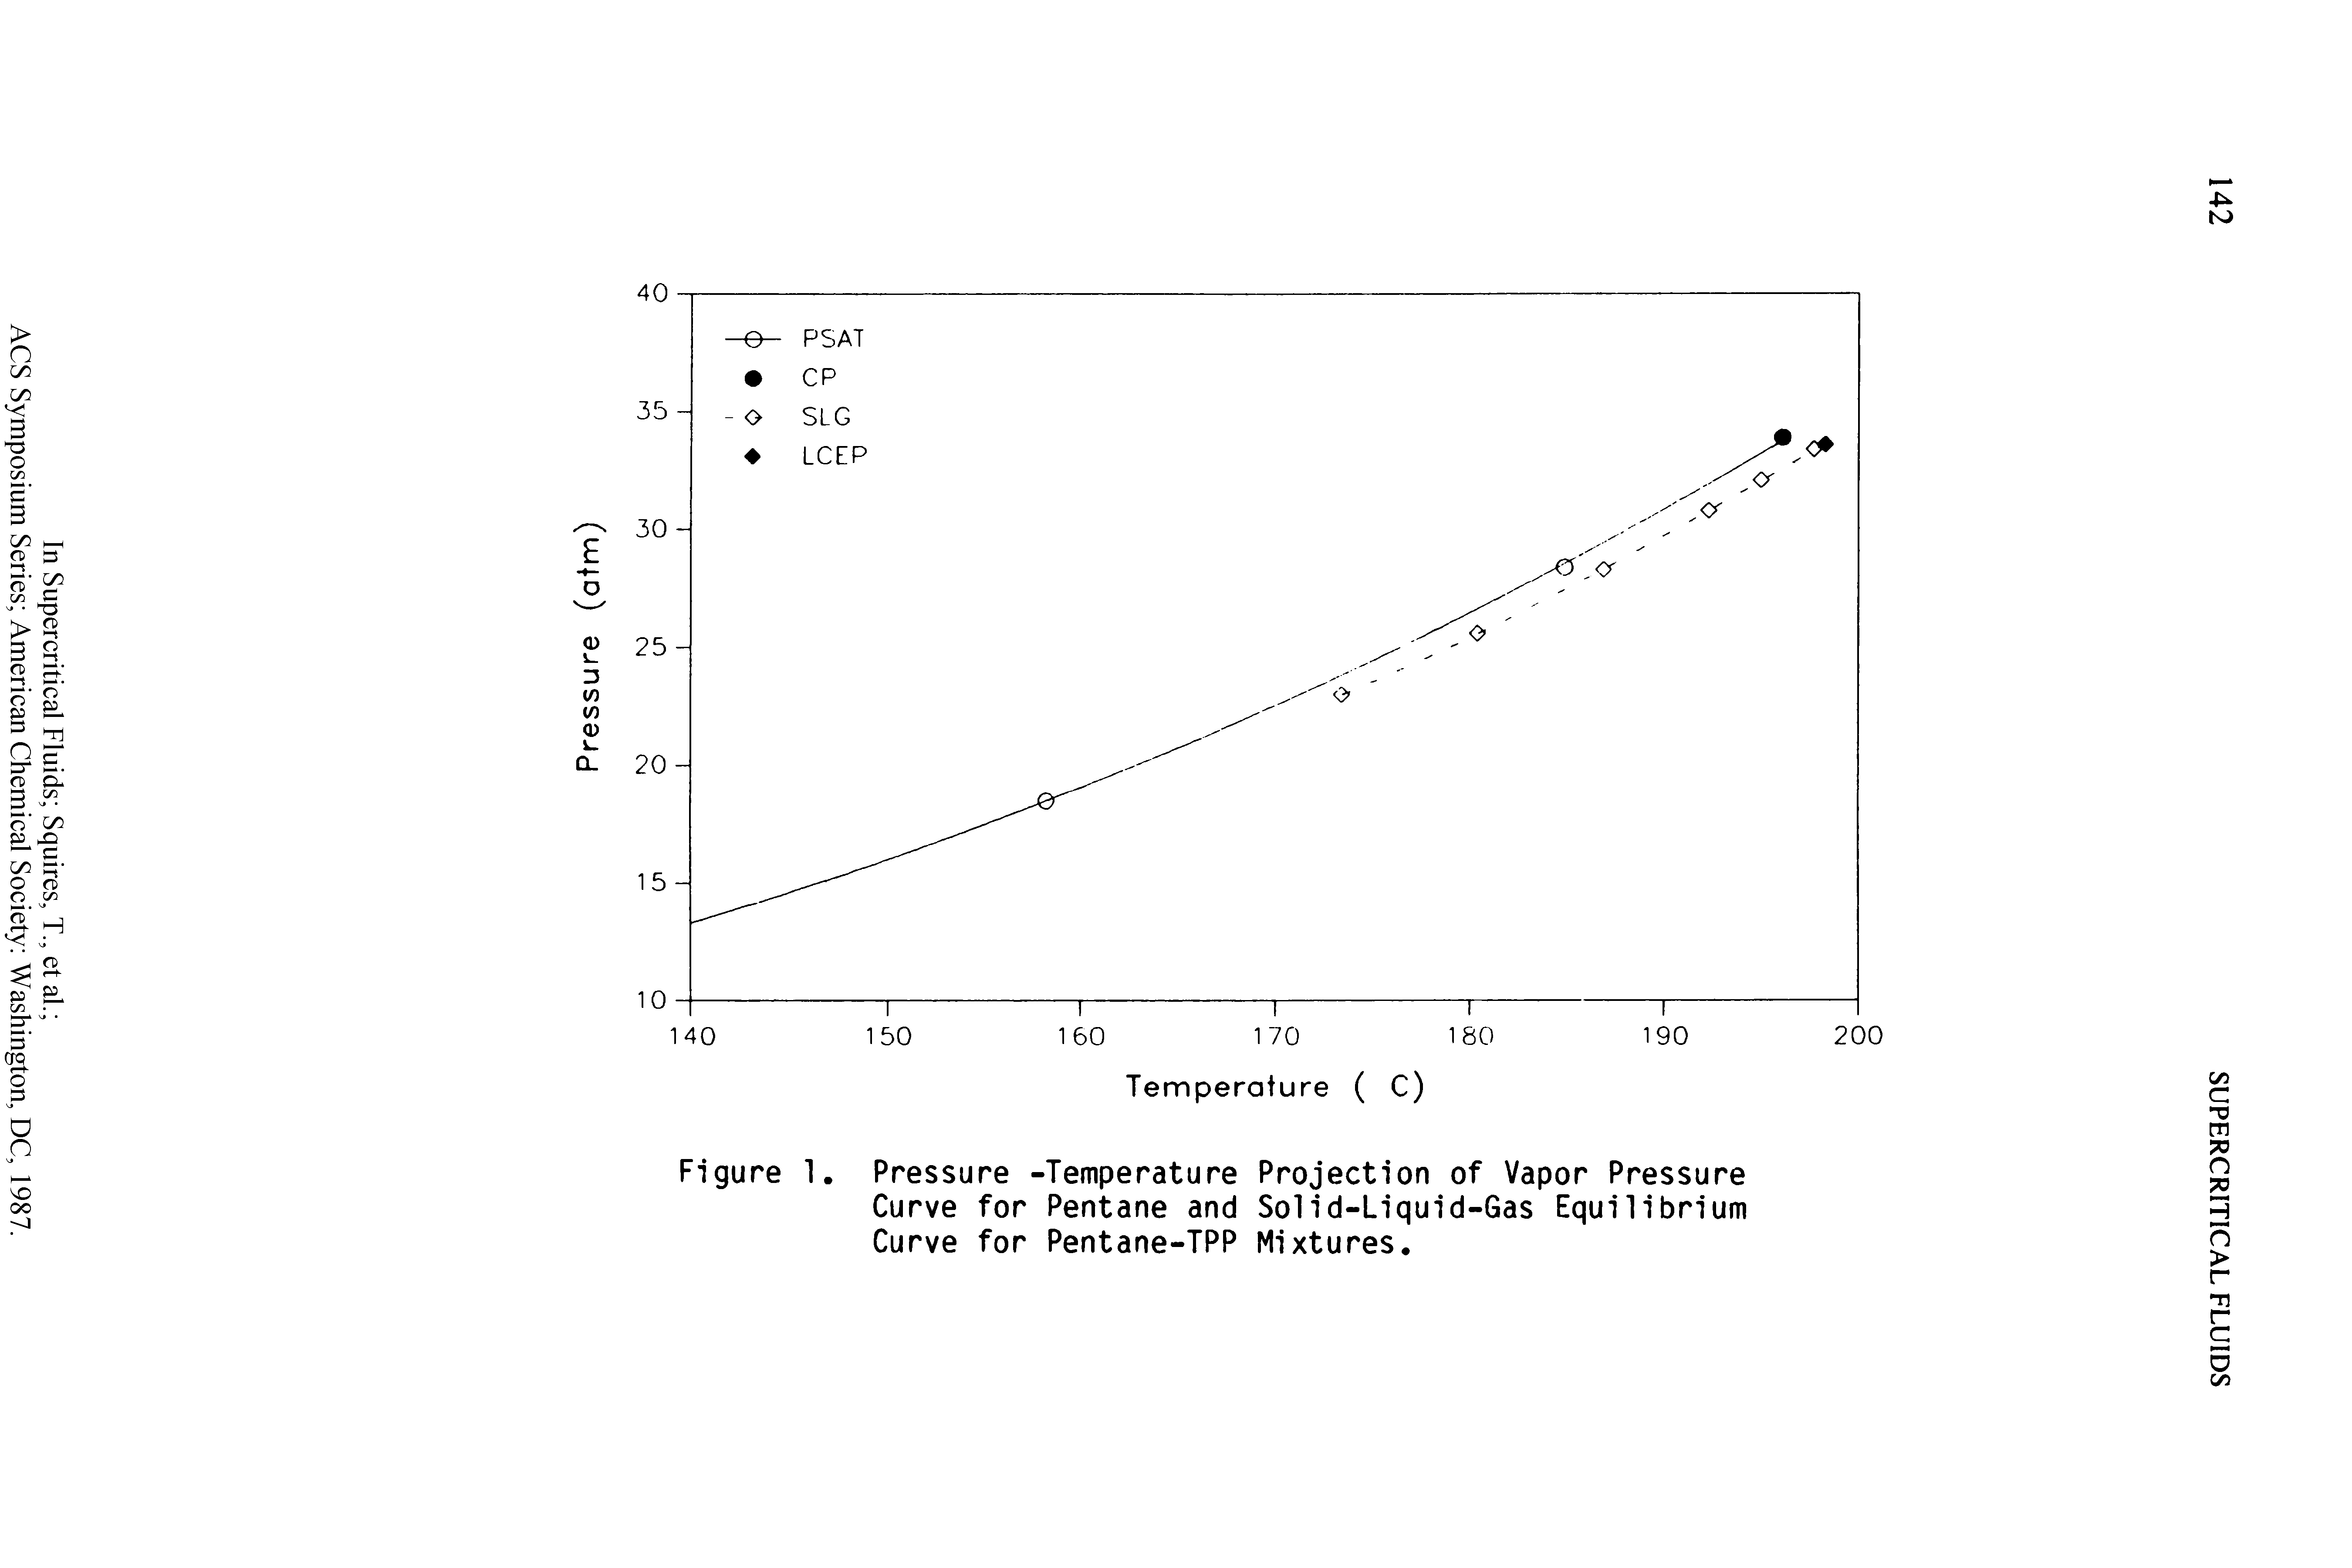 Figure 1. Pressure -Temperature Projection of Vapor Pressure Curve for Pentane and Solid-Liquid-Gas Equilibrium Curve for Pentane-TPP Mixtures.